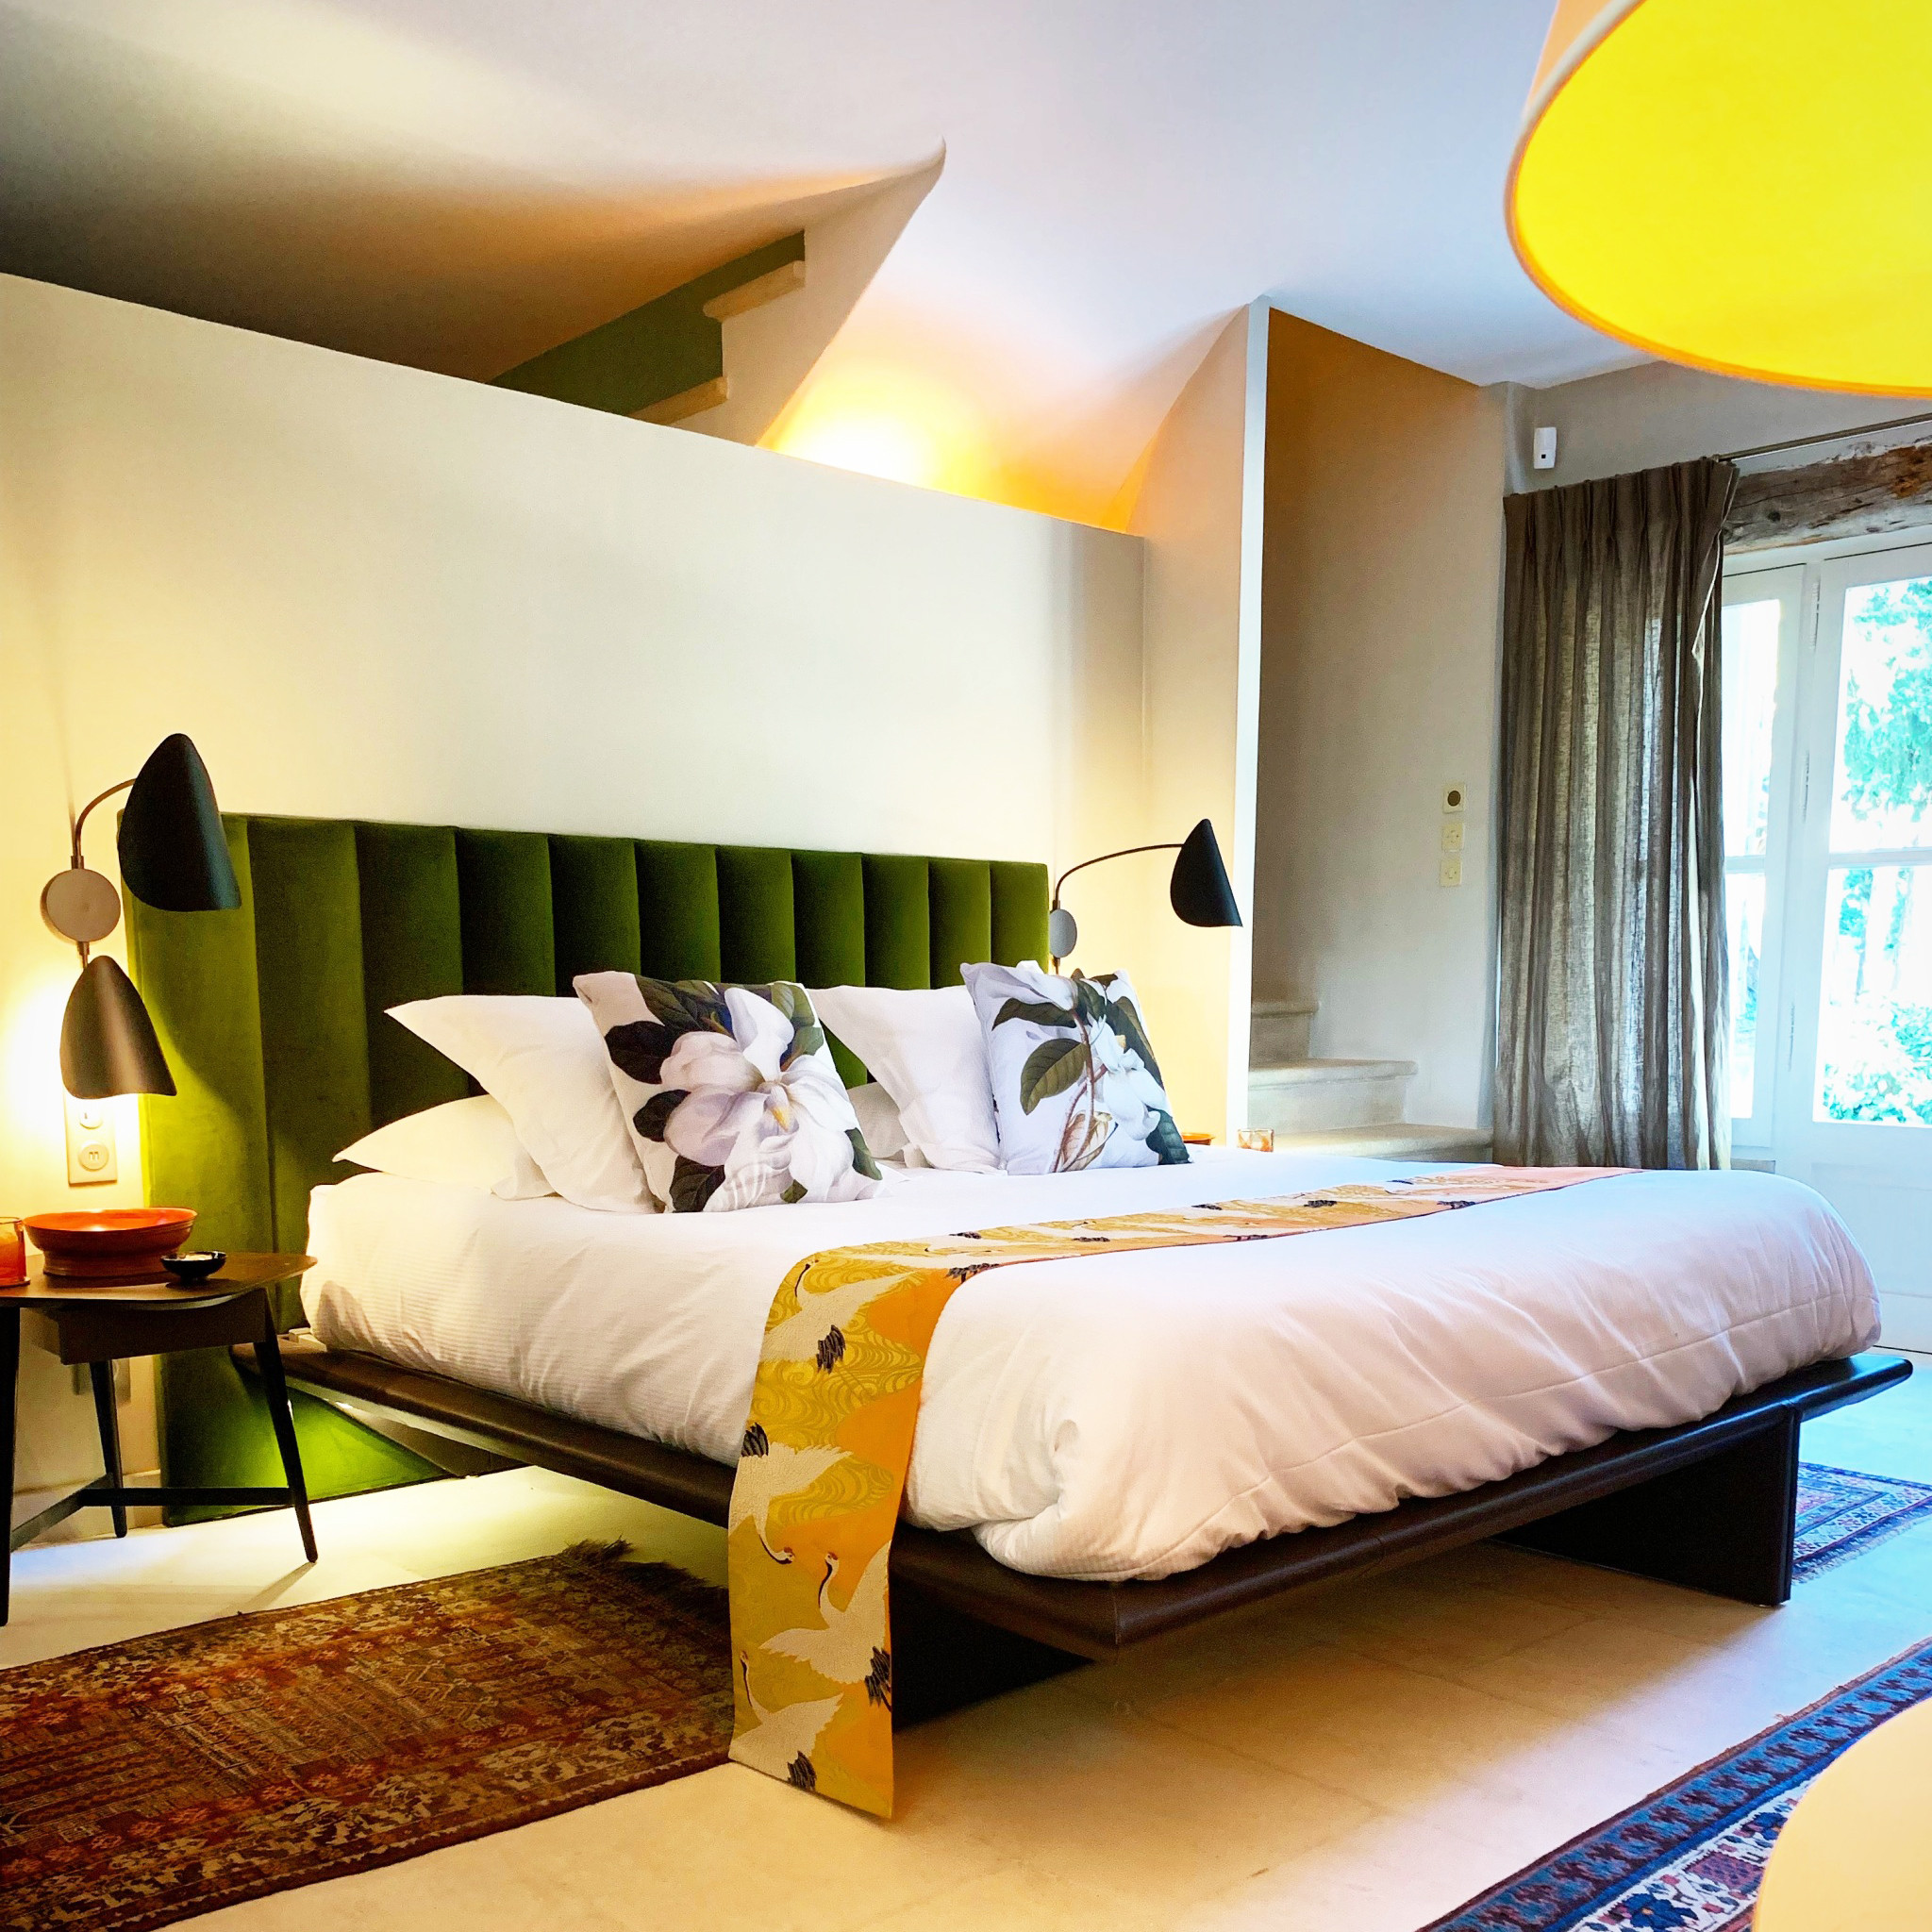 Le Pavillon de Galon - A designed and joyful en suite bedroom, inspired by natural Provence